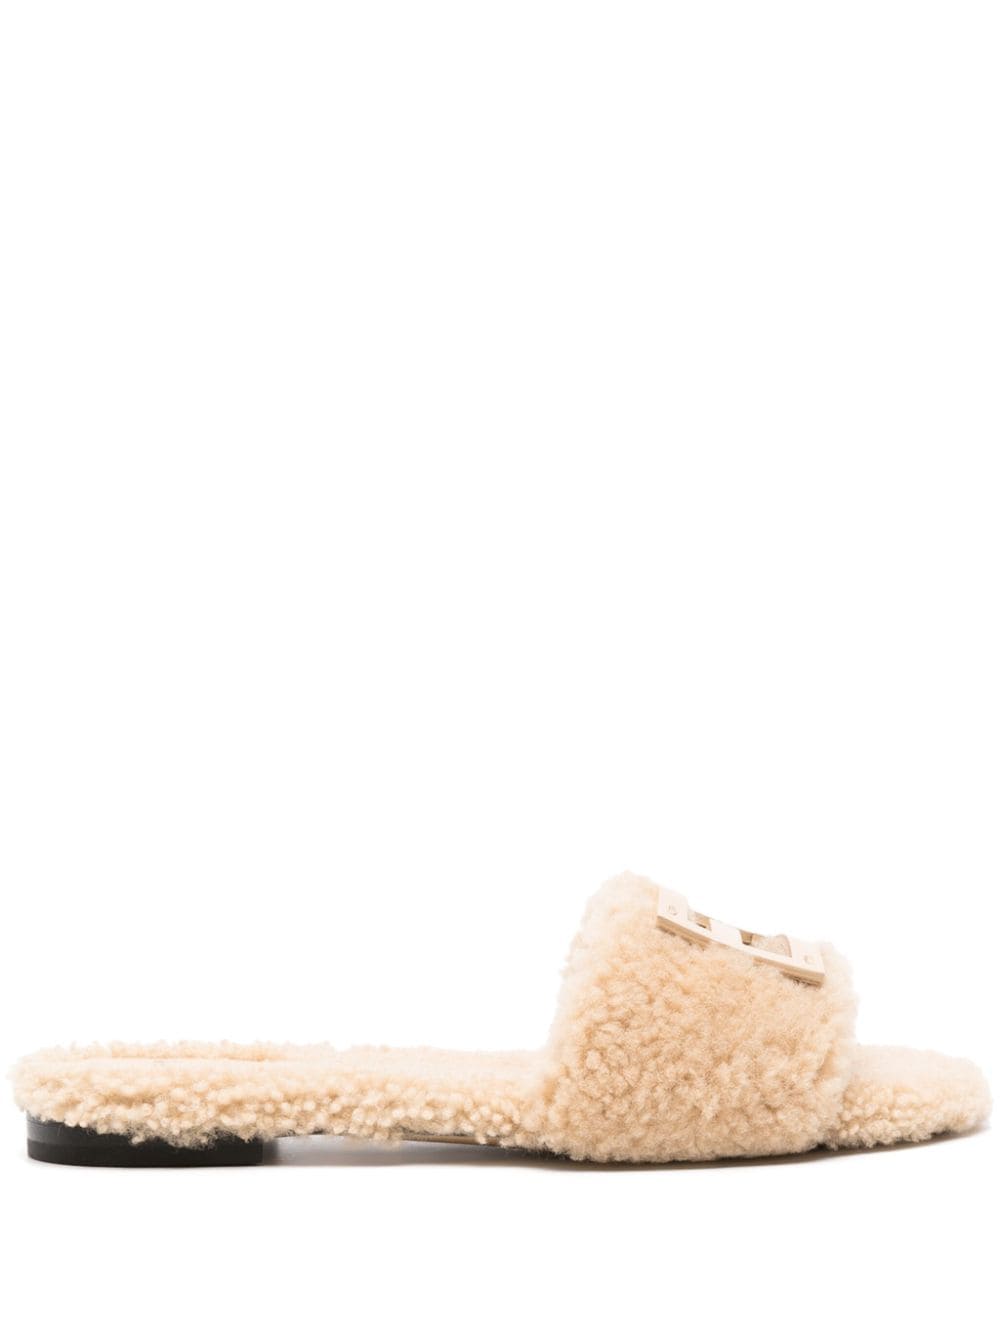 Fendi Baguette Sandals In Natural